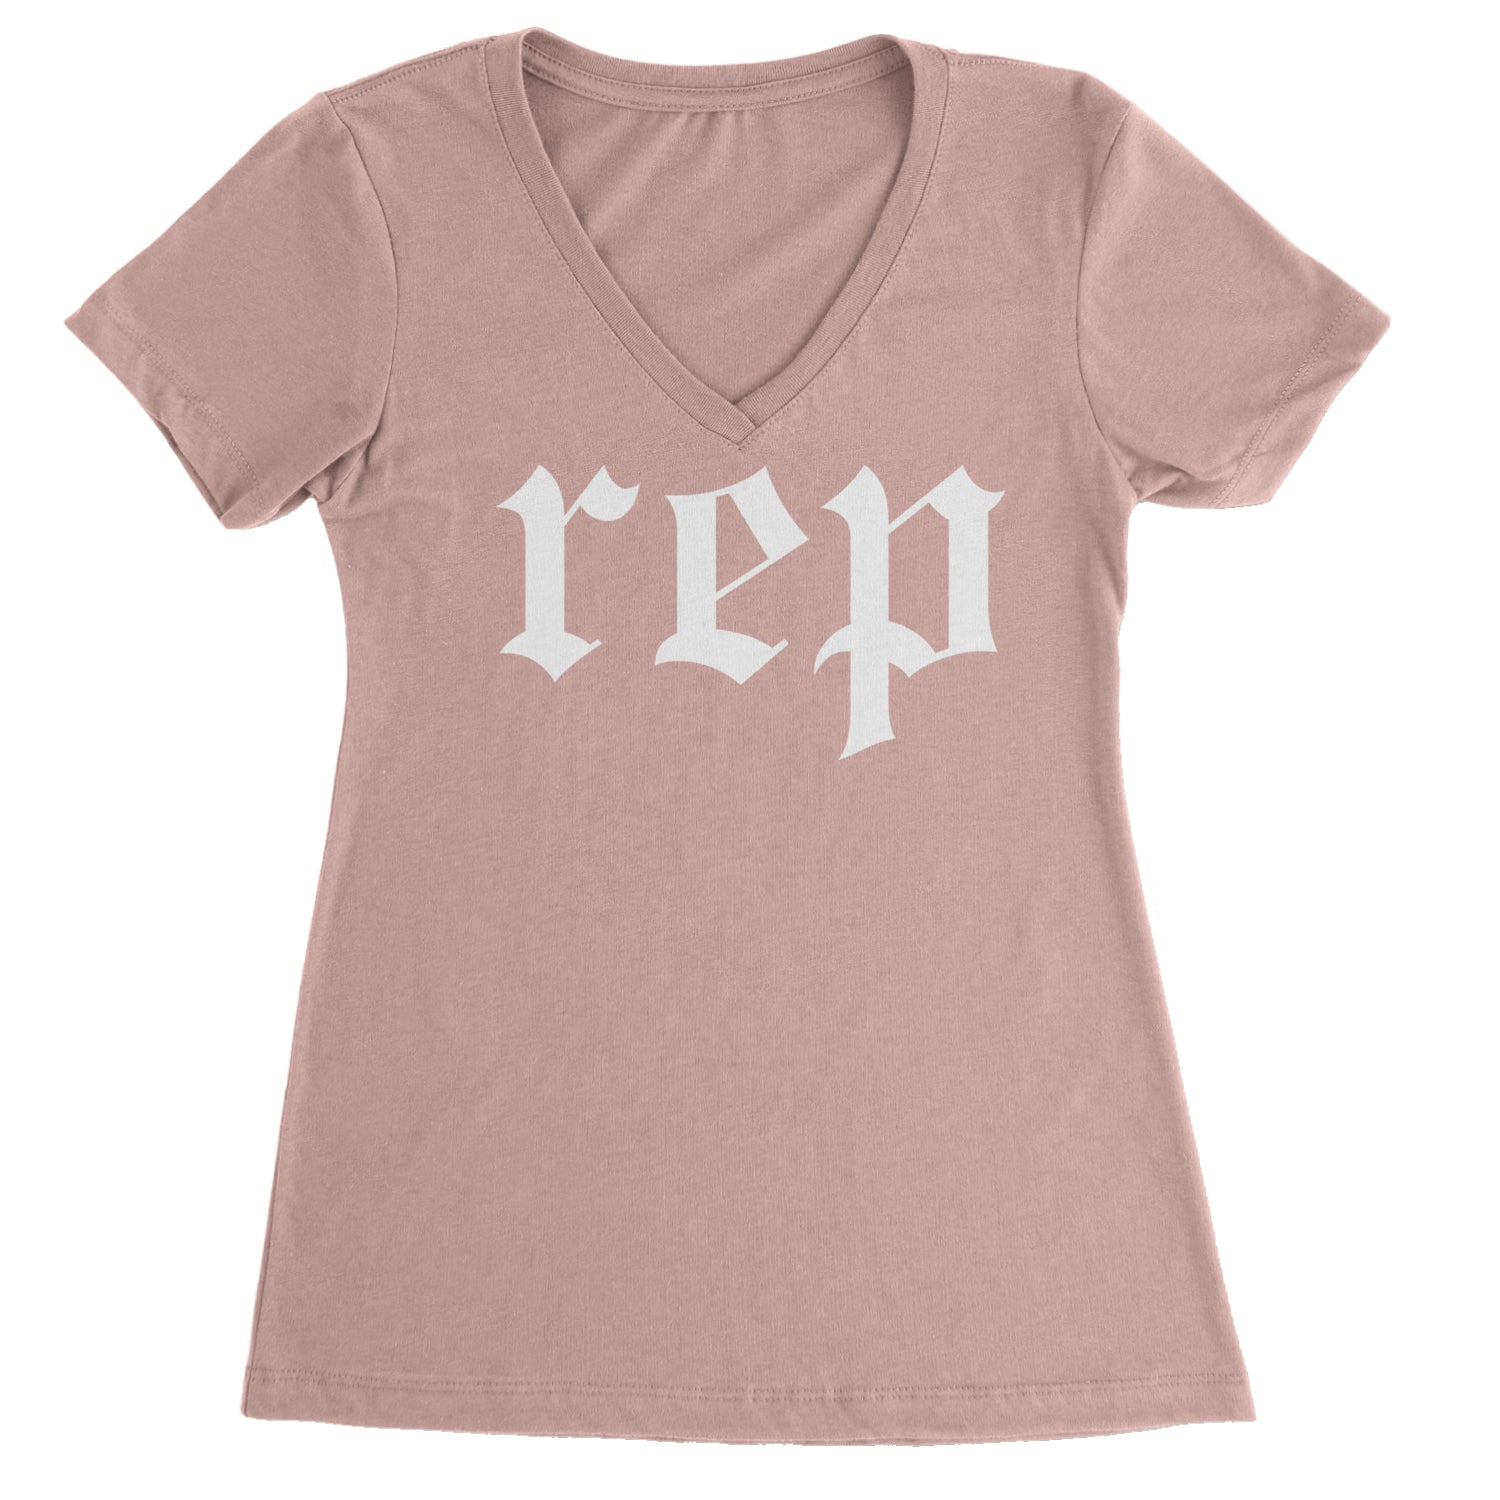 REP Reputation Eras Music Lover Gift Fan Favorite Ladies V-Neck T-shirt Light Pink